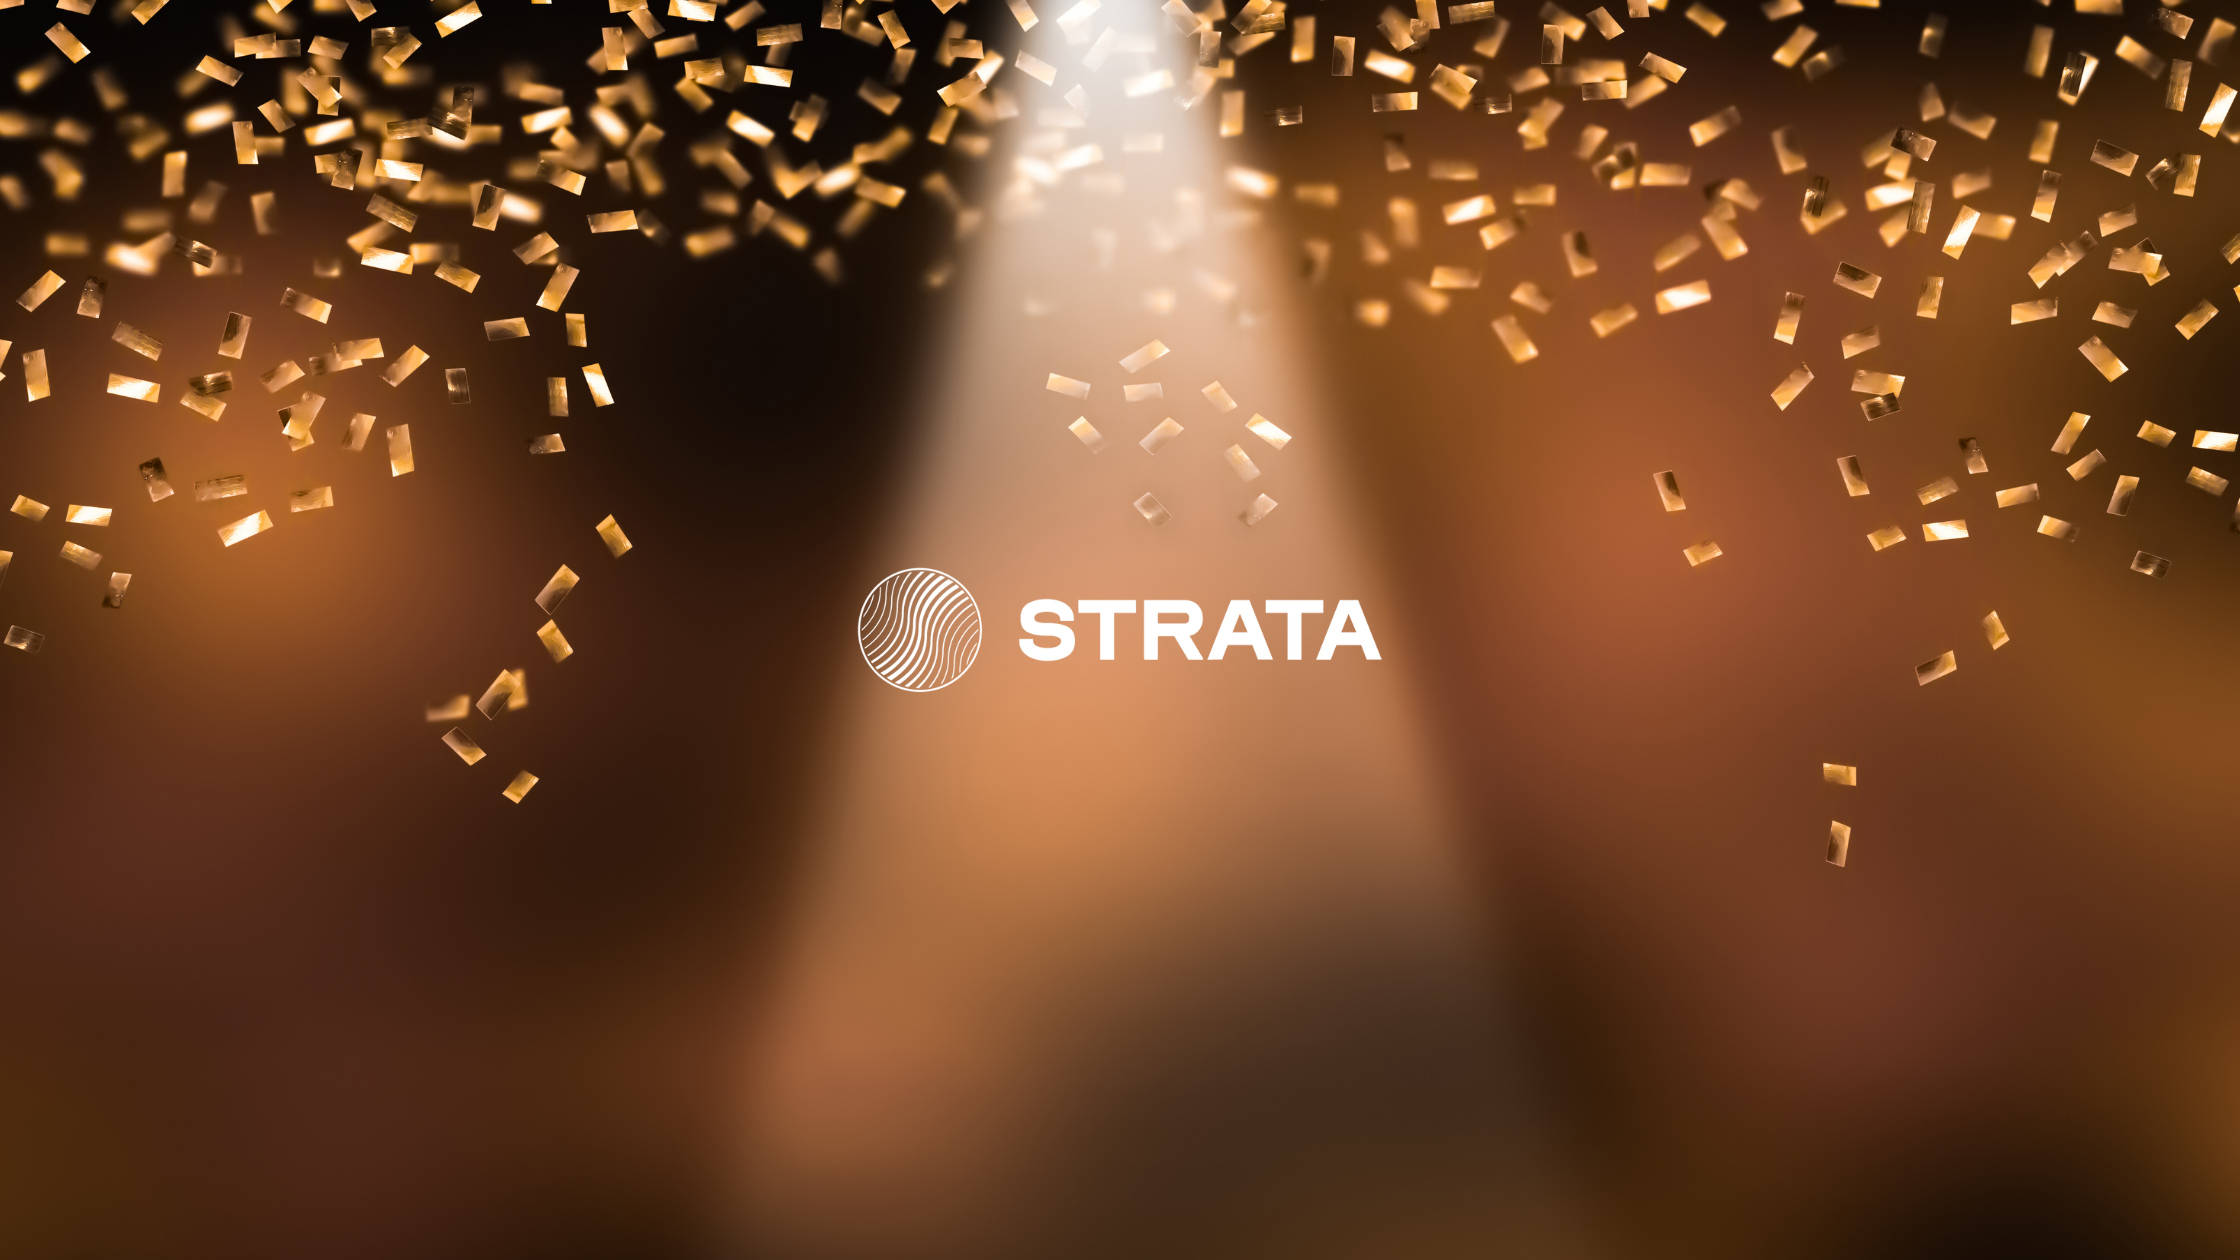 Strata logo spotlight image